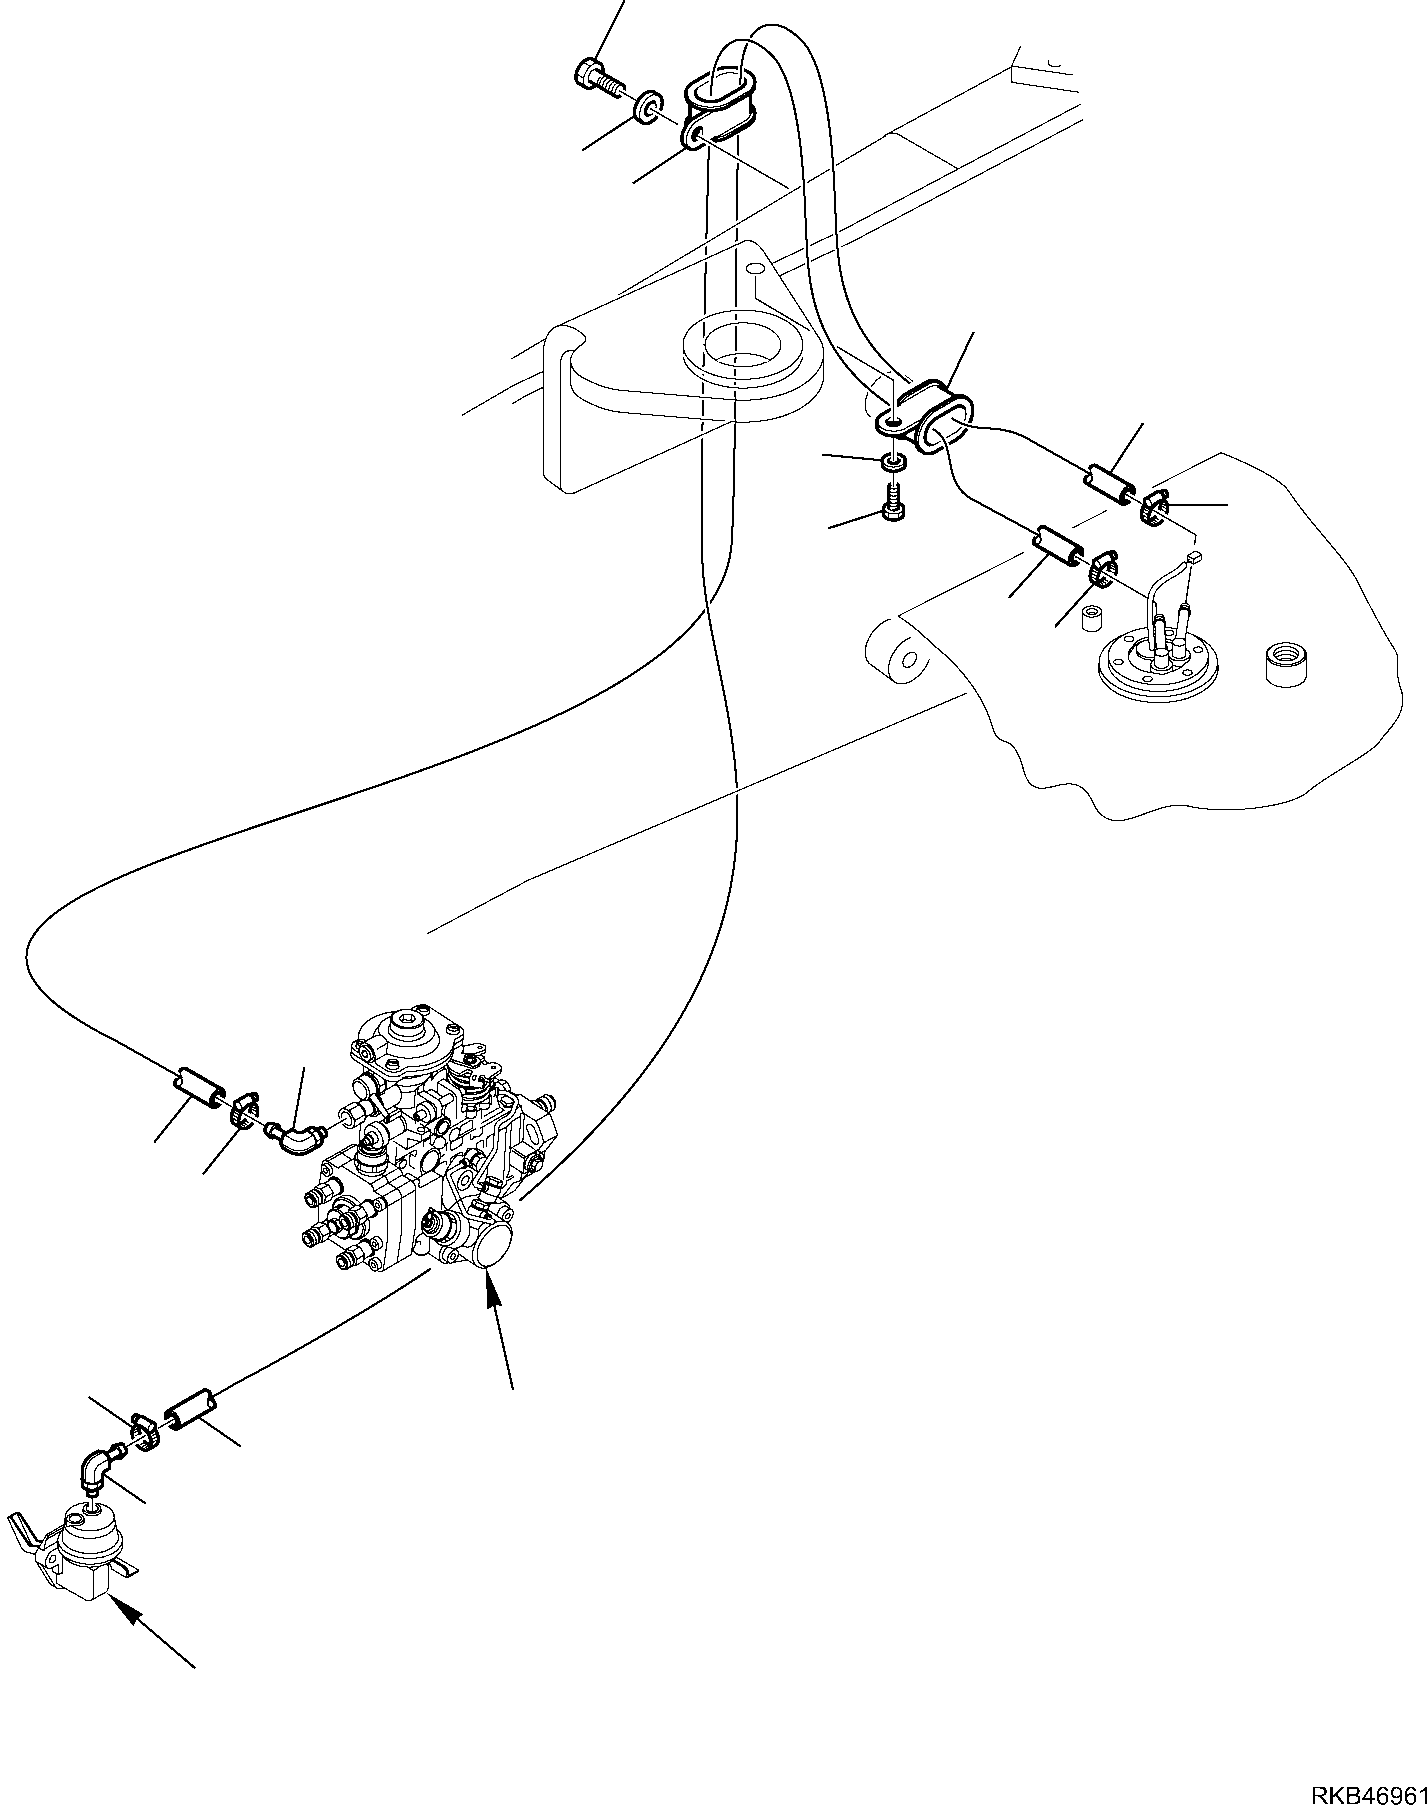 15. FUEL LINE [1310] - Komatsu part WB97S-5E0 S/N F30003-Up [wb97s5e0]